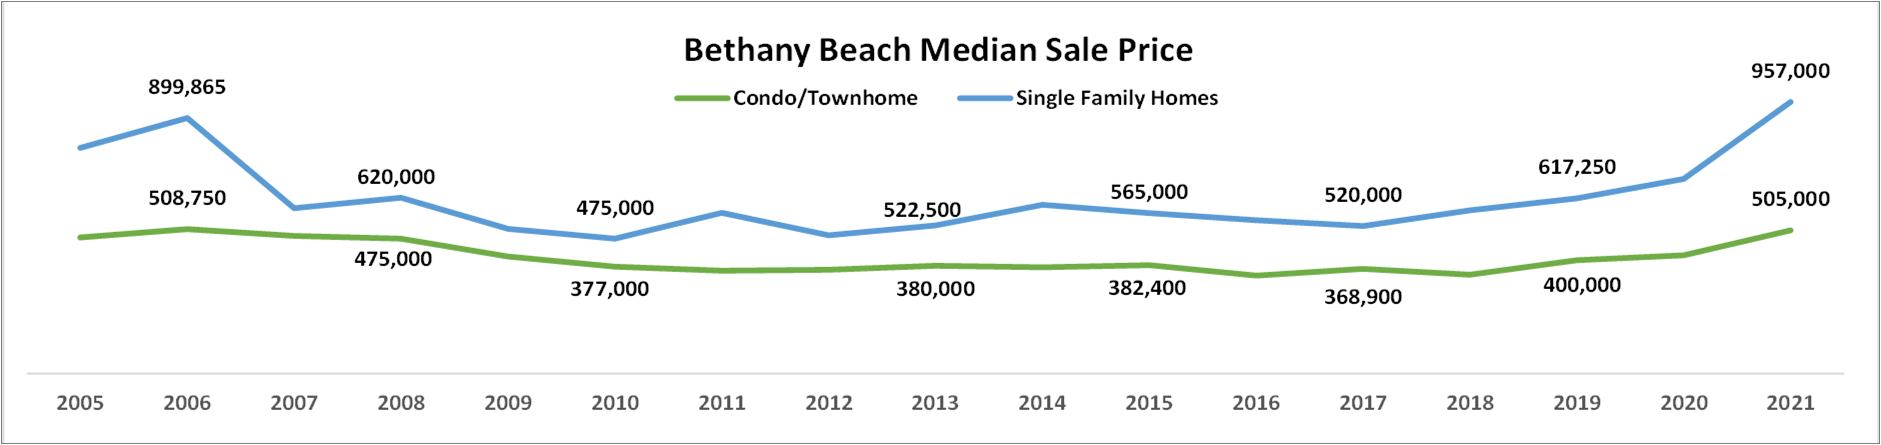 Bethany Beach median sales price